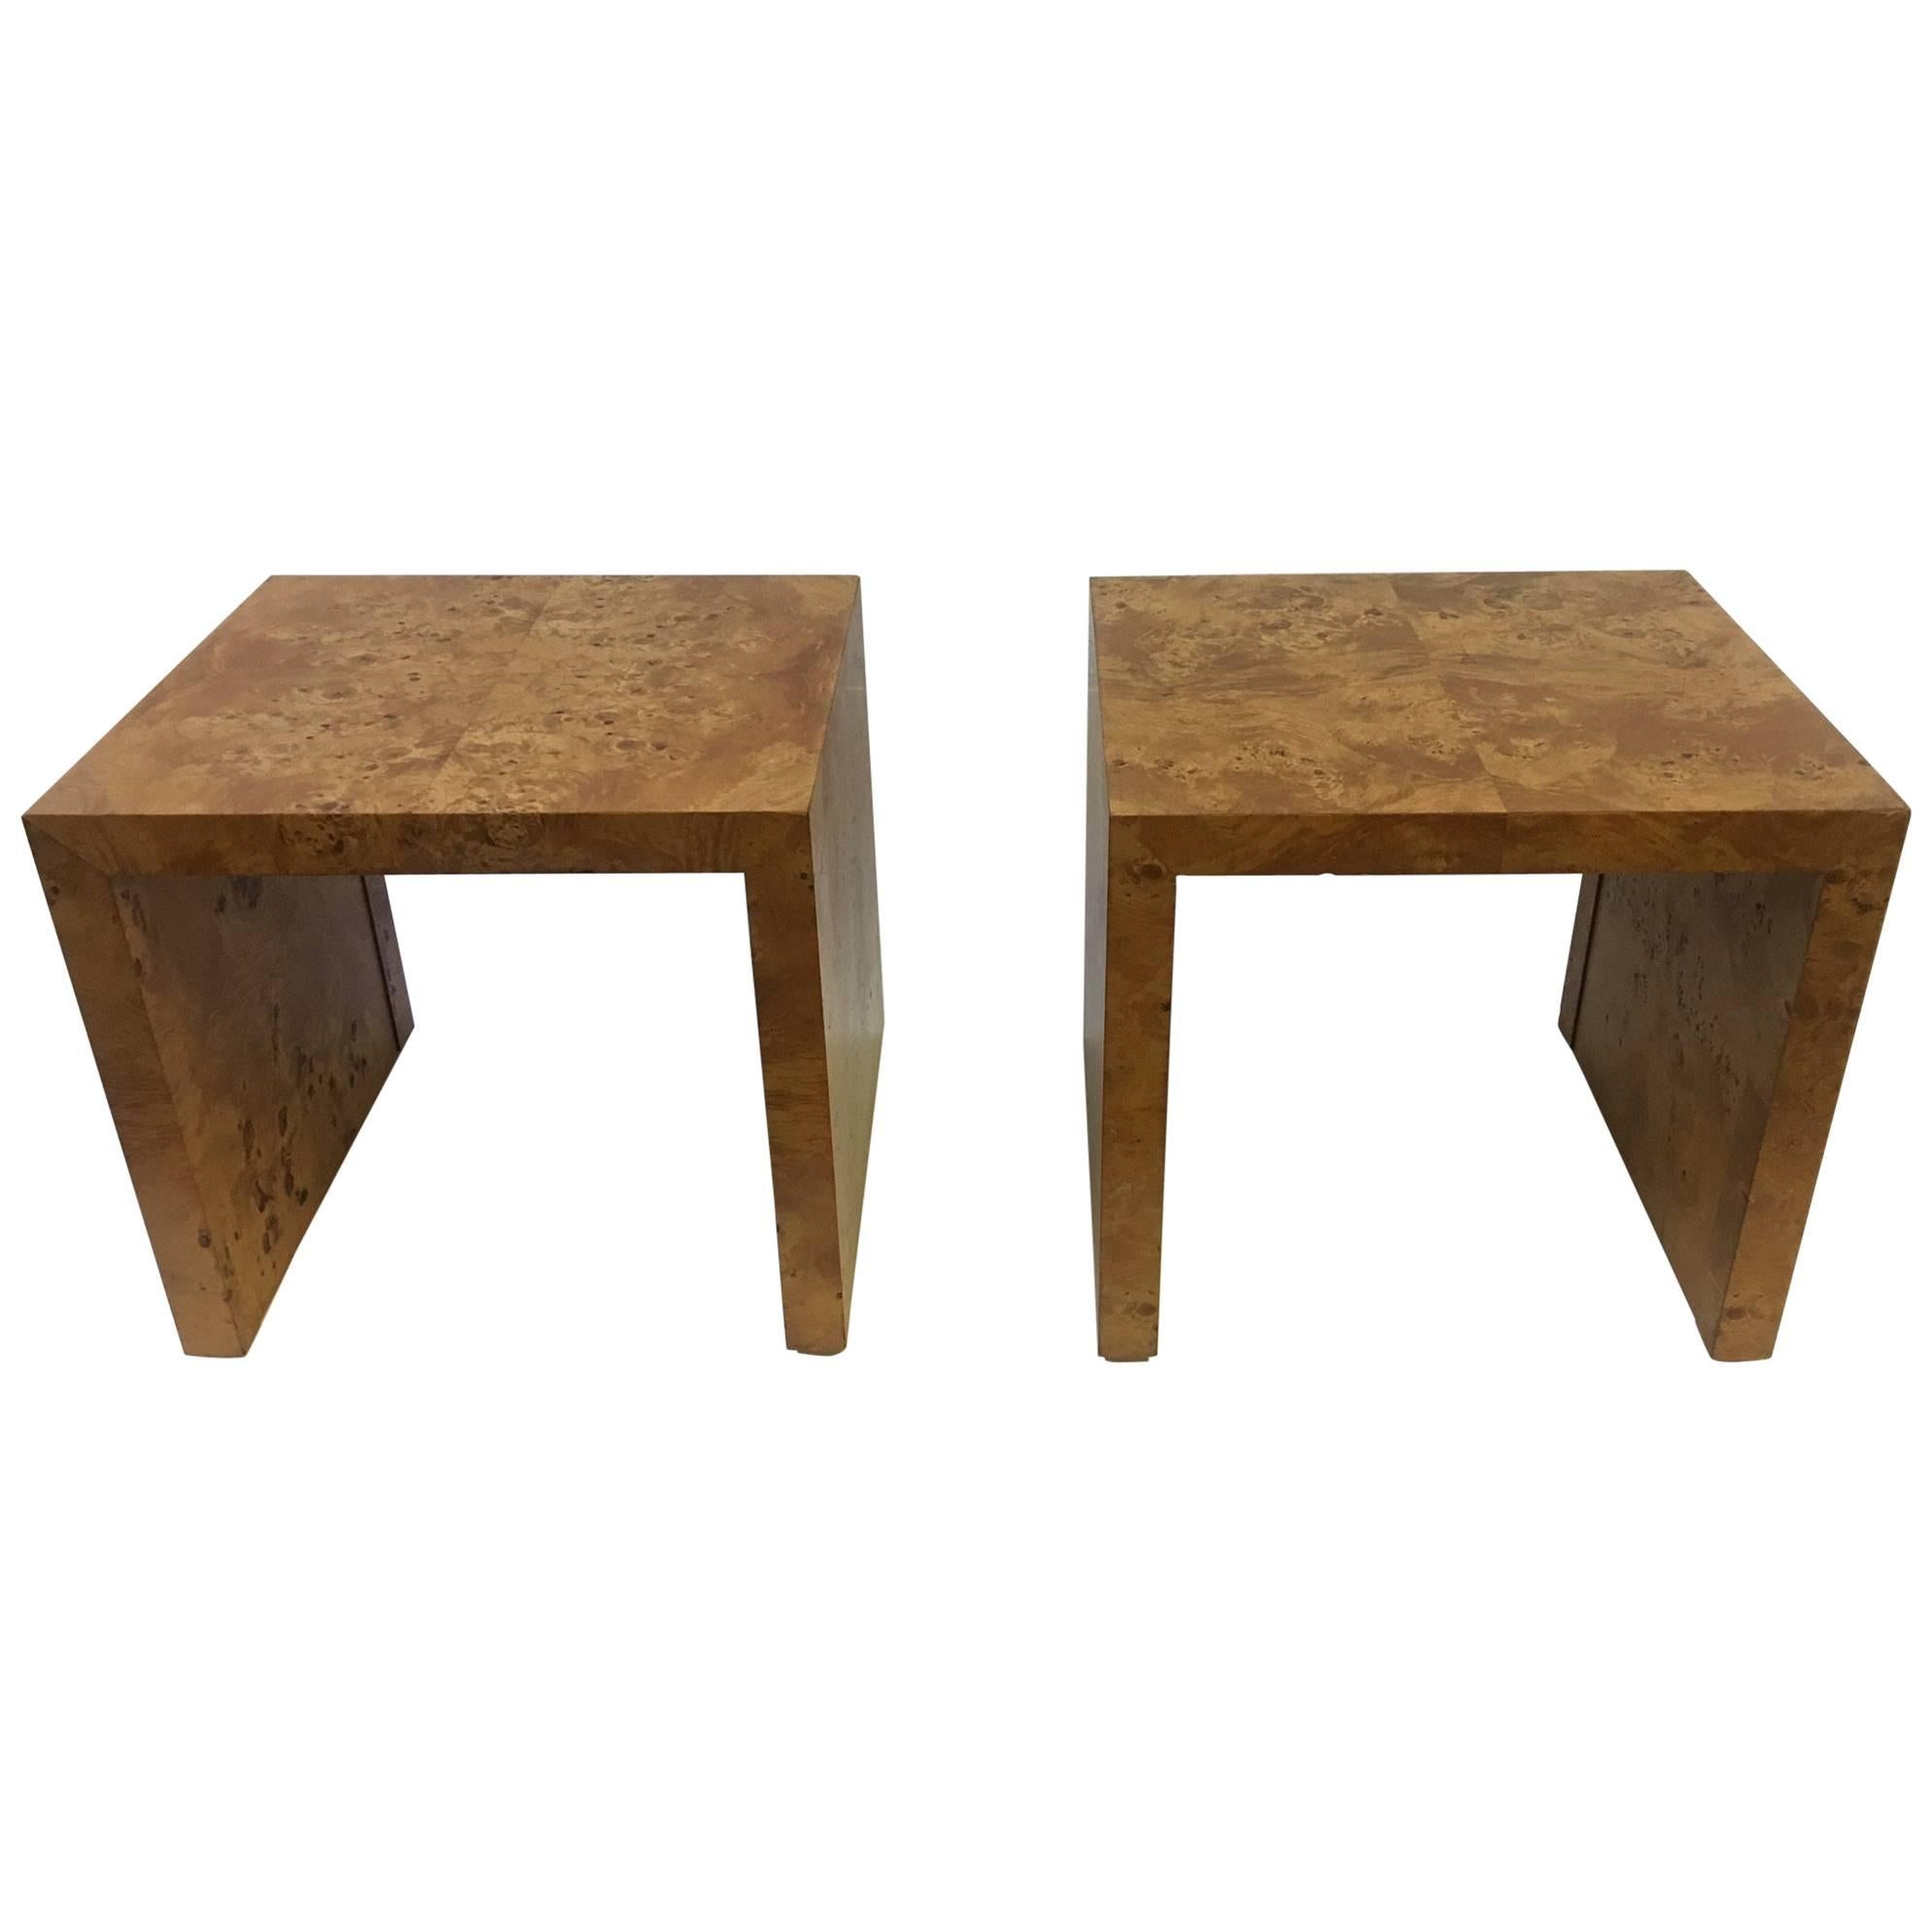 Pair of Burl Wood Side Tables or Nightstands by Milo Baughman